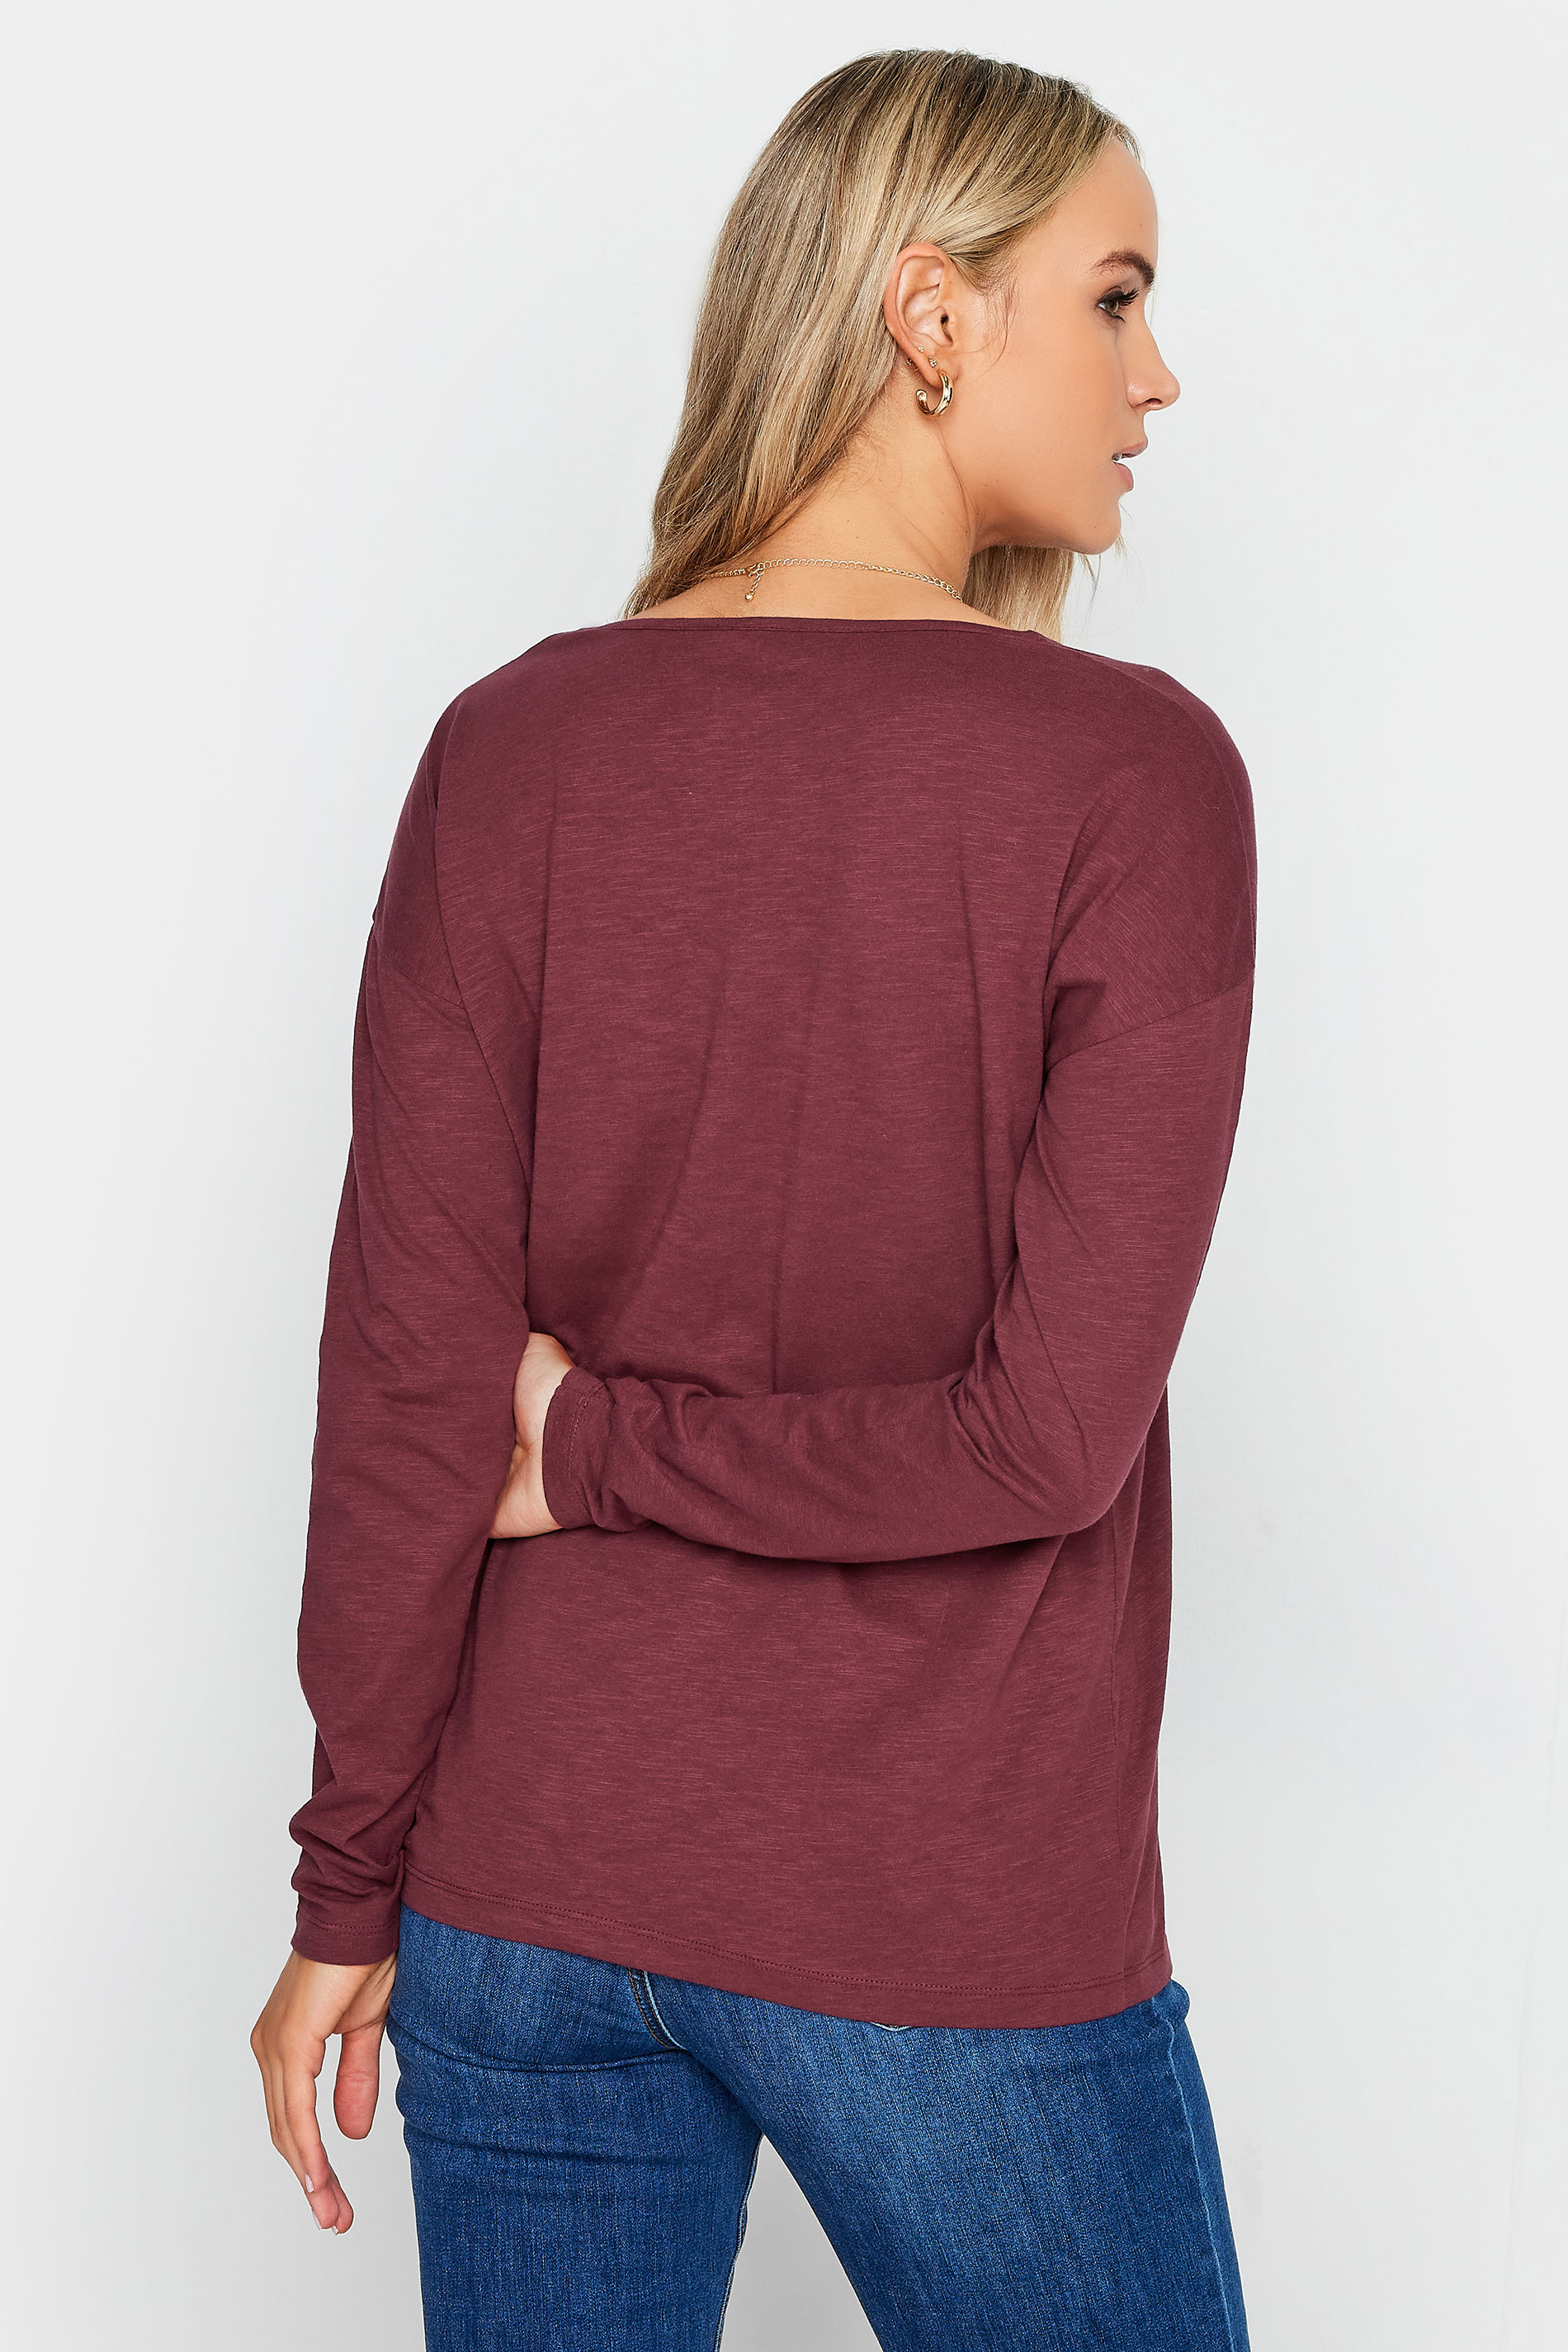 LTS Tall Berry Red V-Neck Long Sleeve Cotton T-Shirt | Long Tall Sally 3